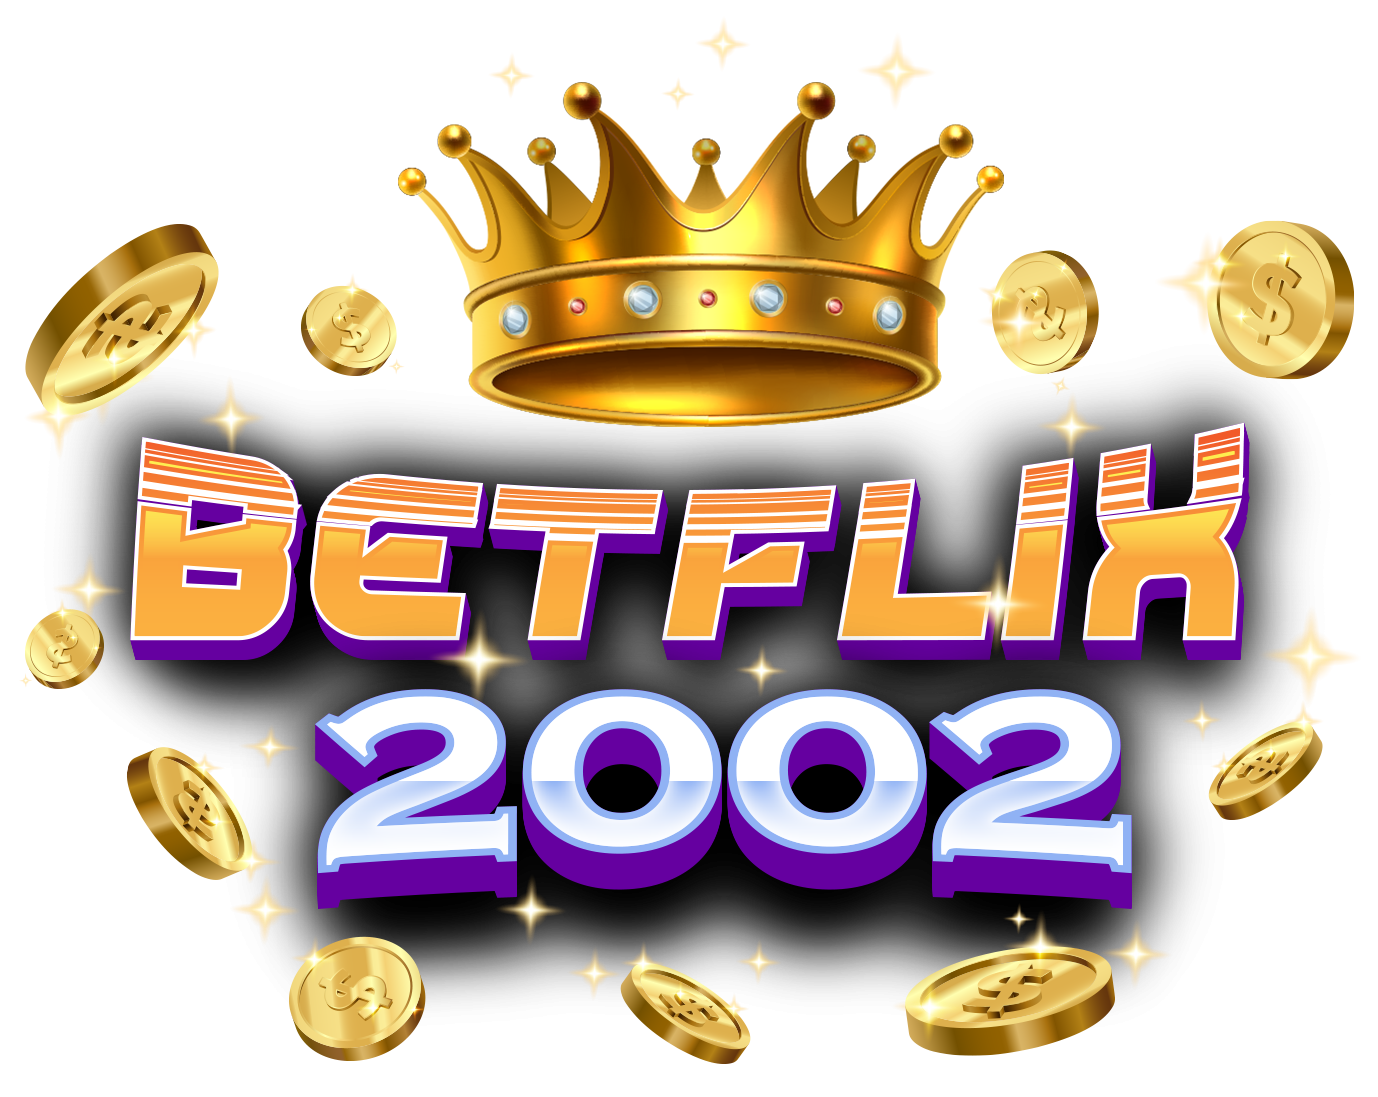 BETFLIX2002